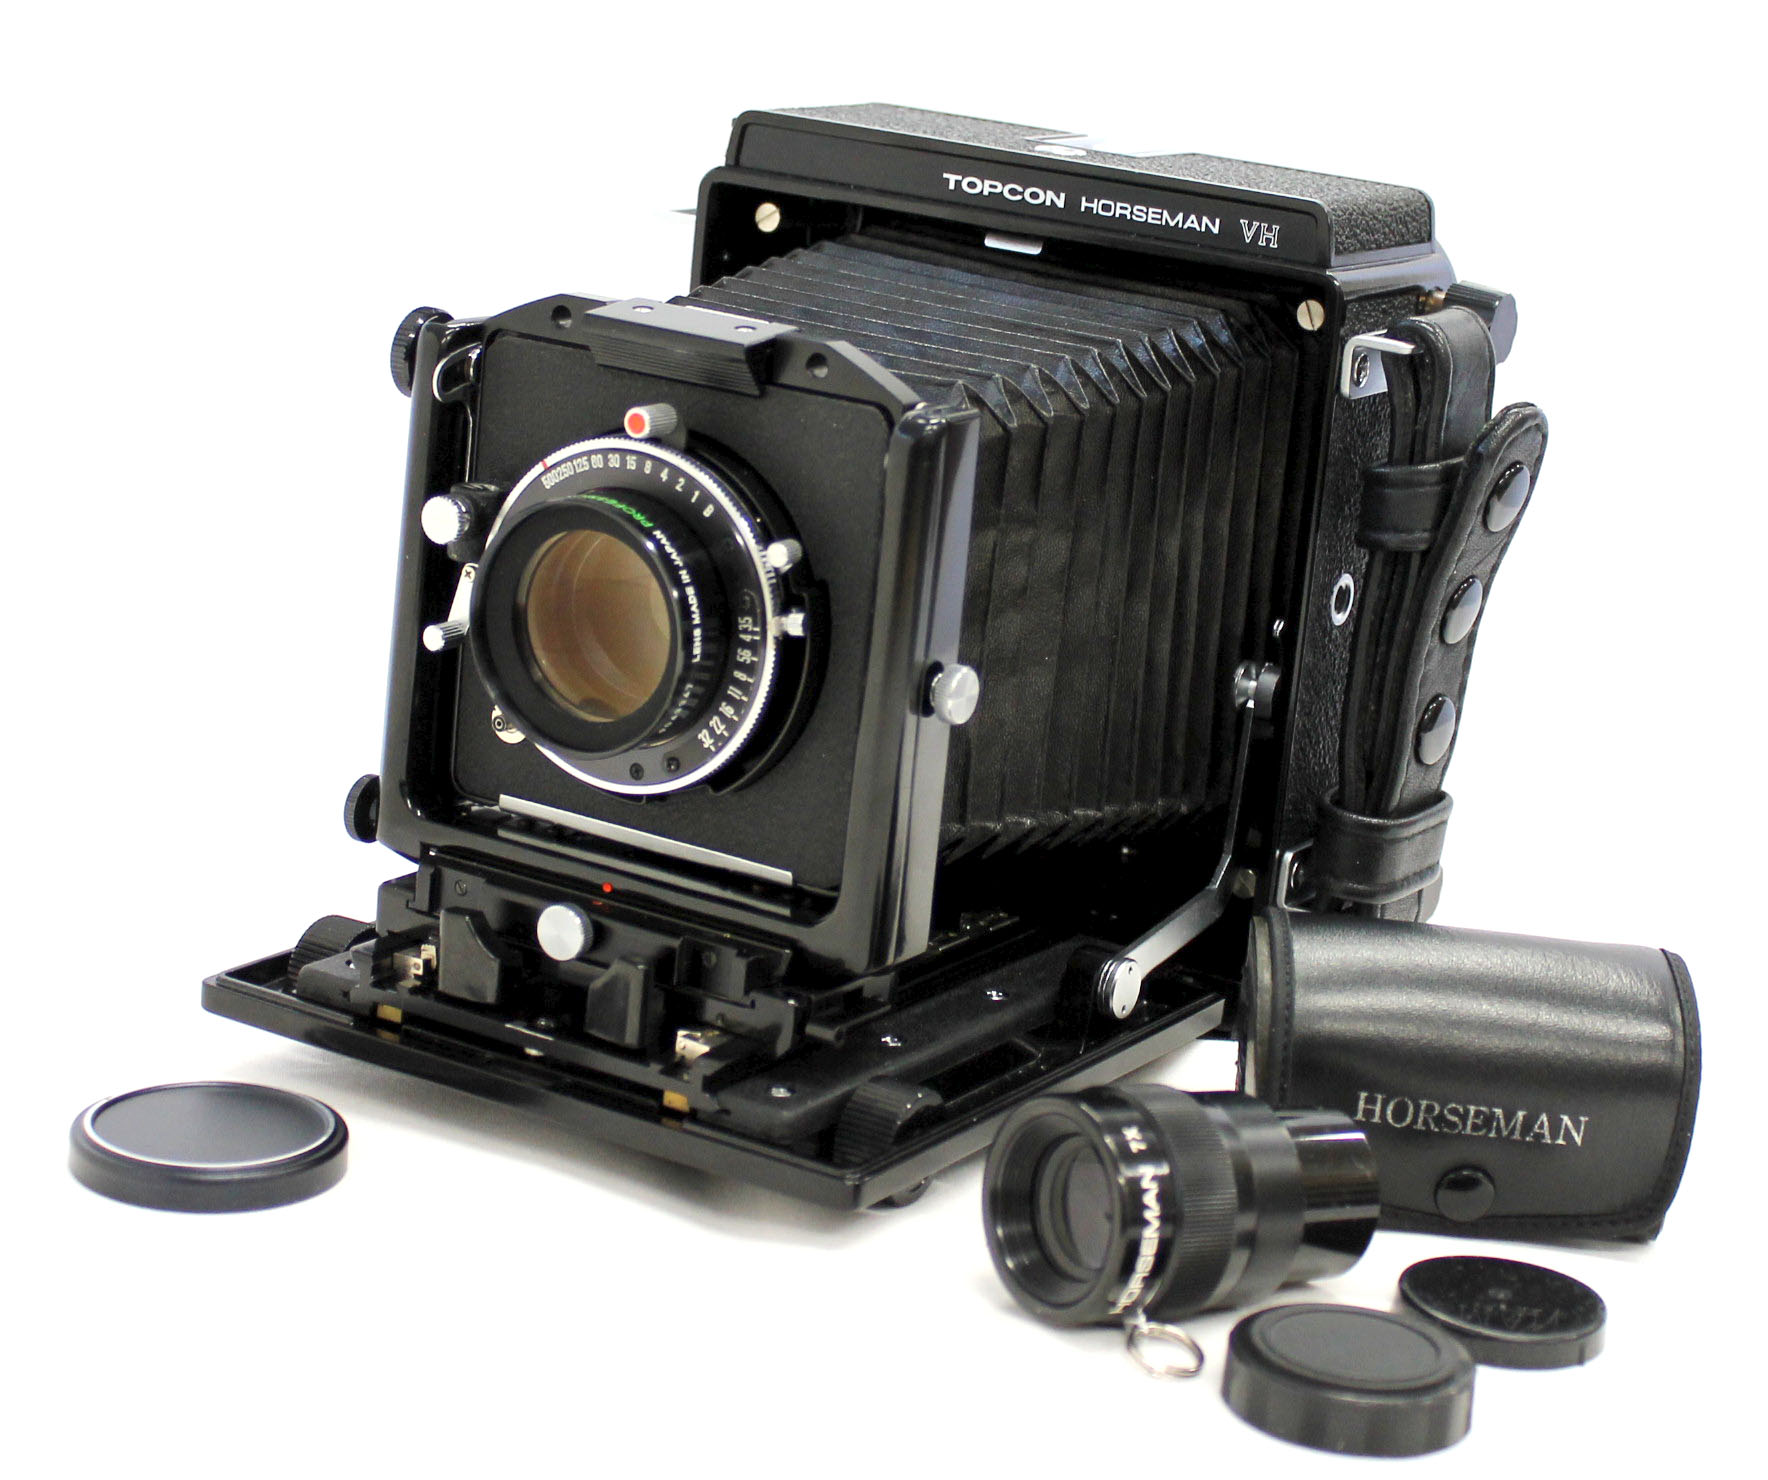 Topcon Horseman VH Large Format Film Camera with Professional Topcor 105mm  F/3.5 Lens and Magnifier from Japan (C1943) | Big Fish J-Camera (Big Fish 